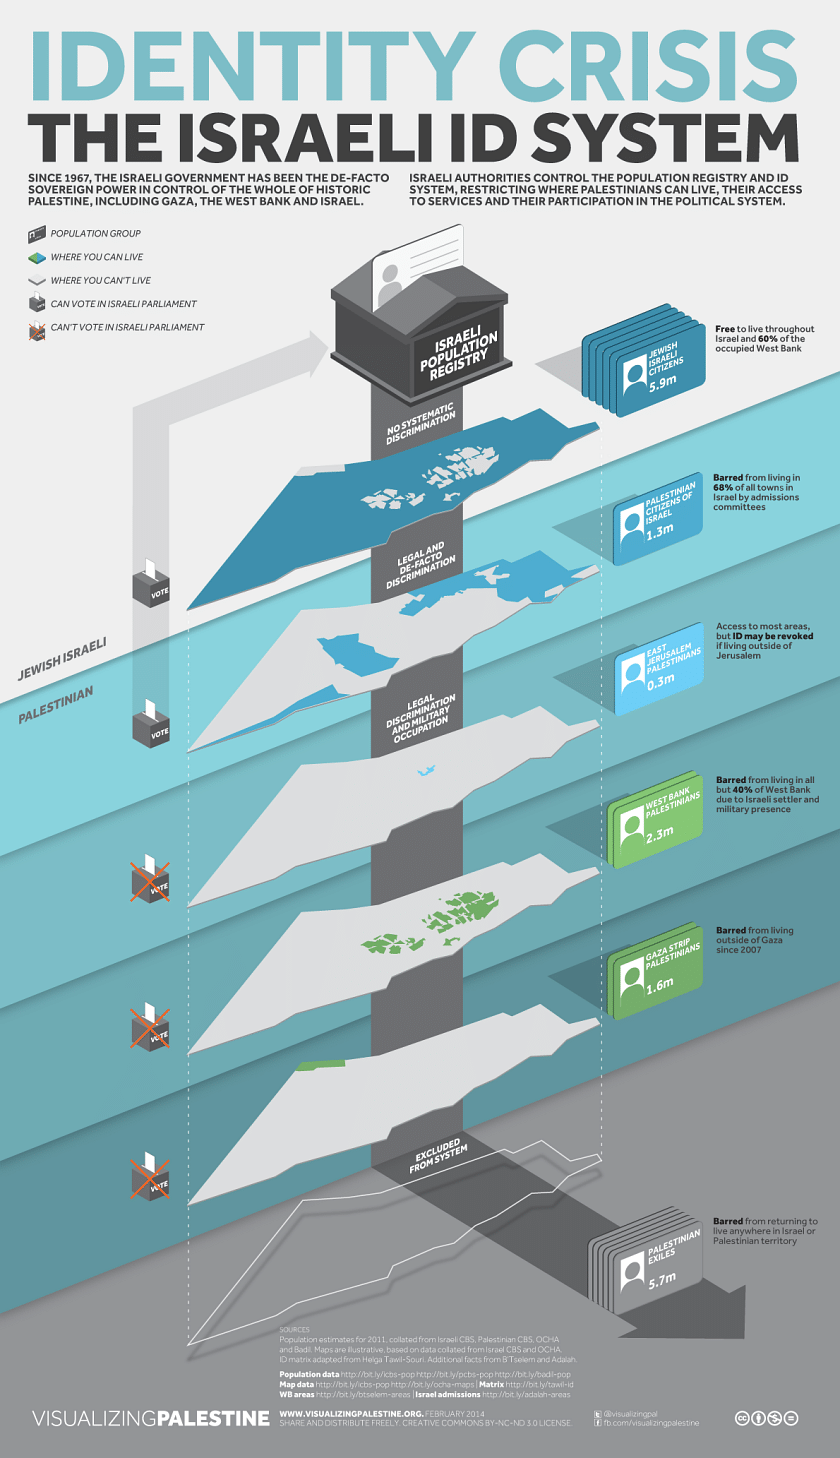 Source: Visualising Palestine